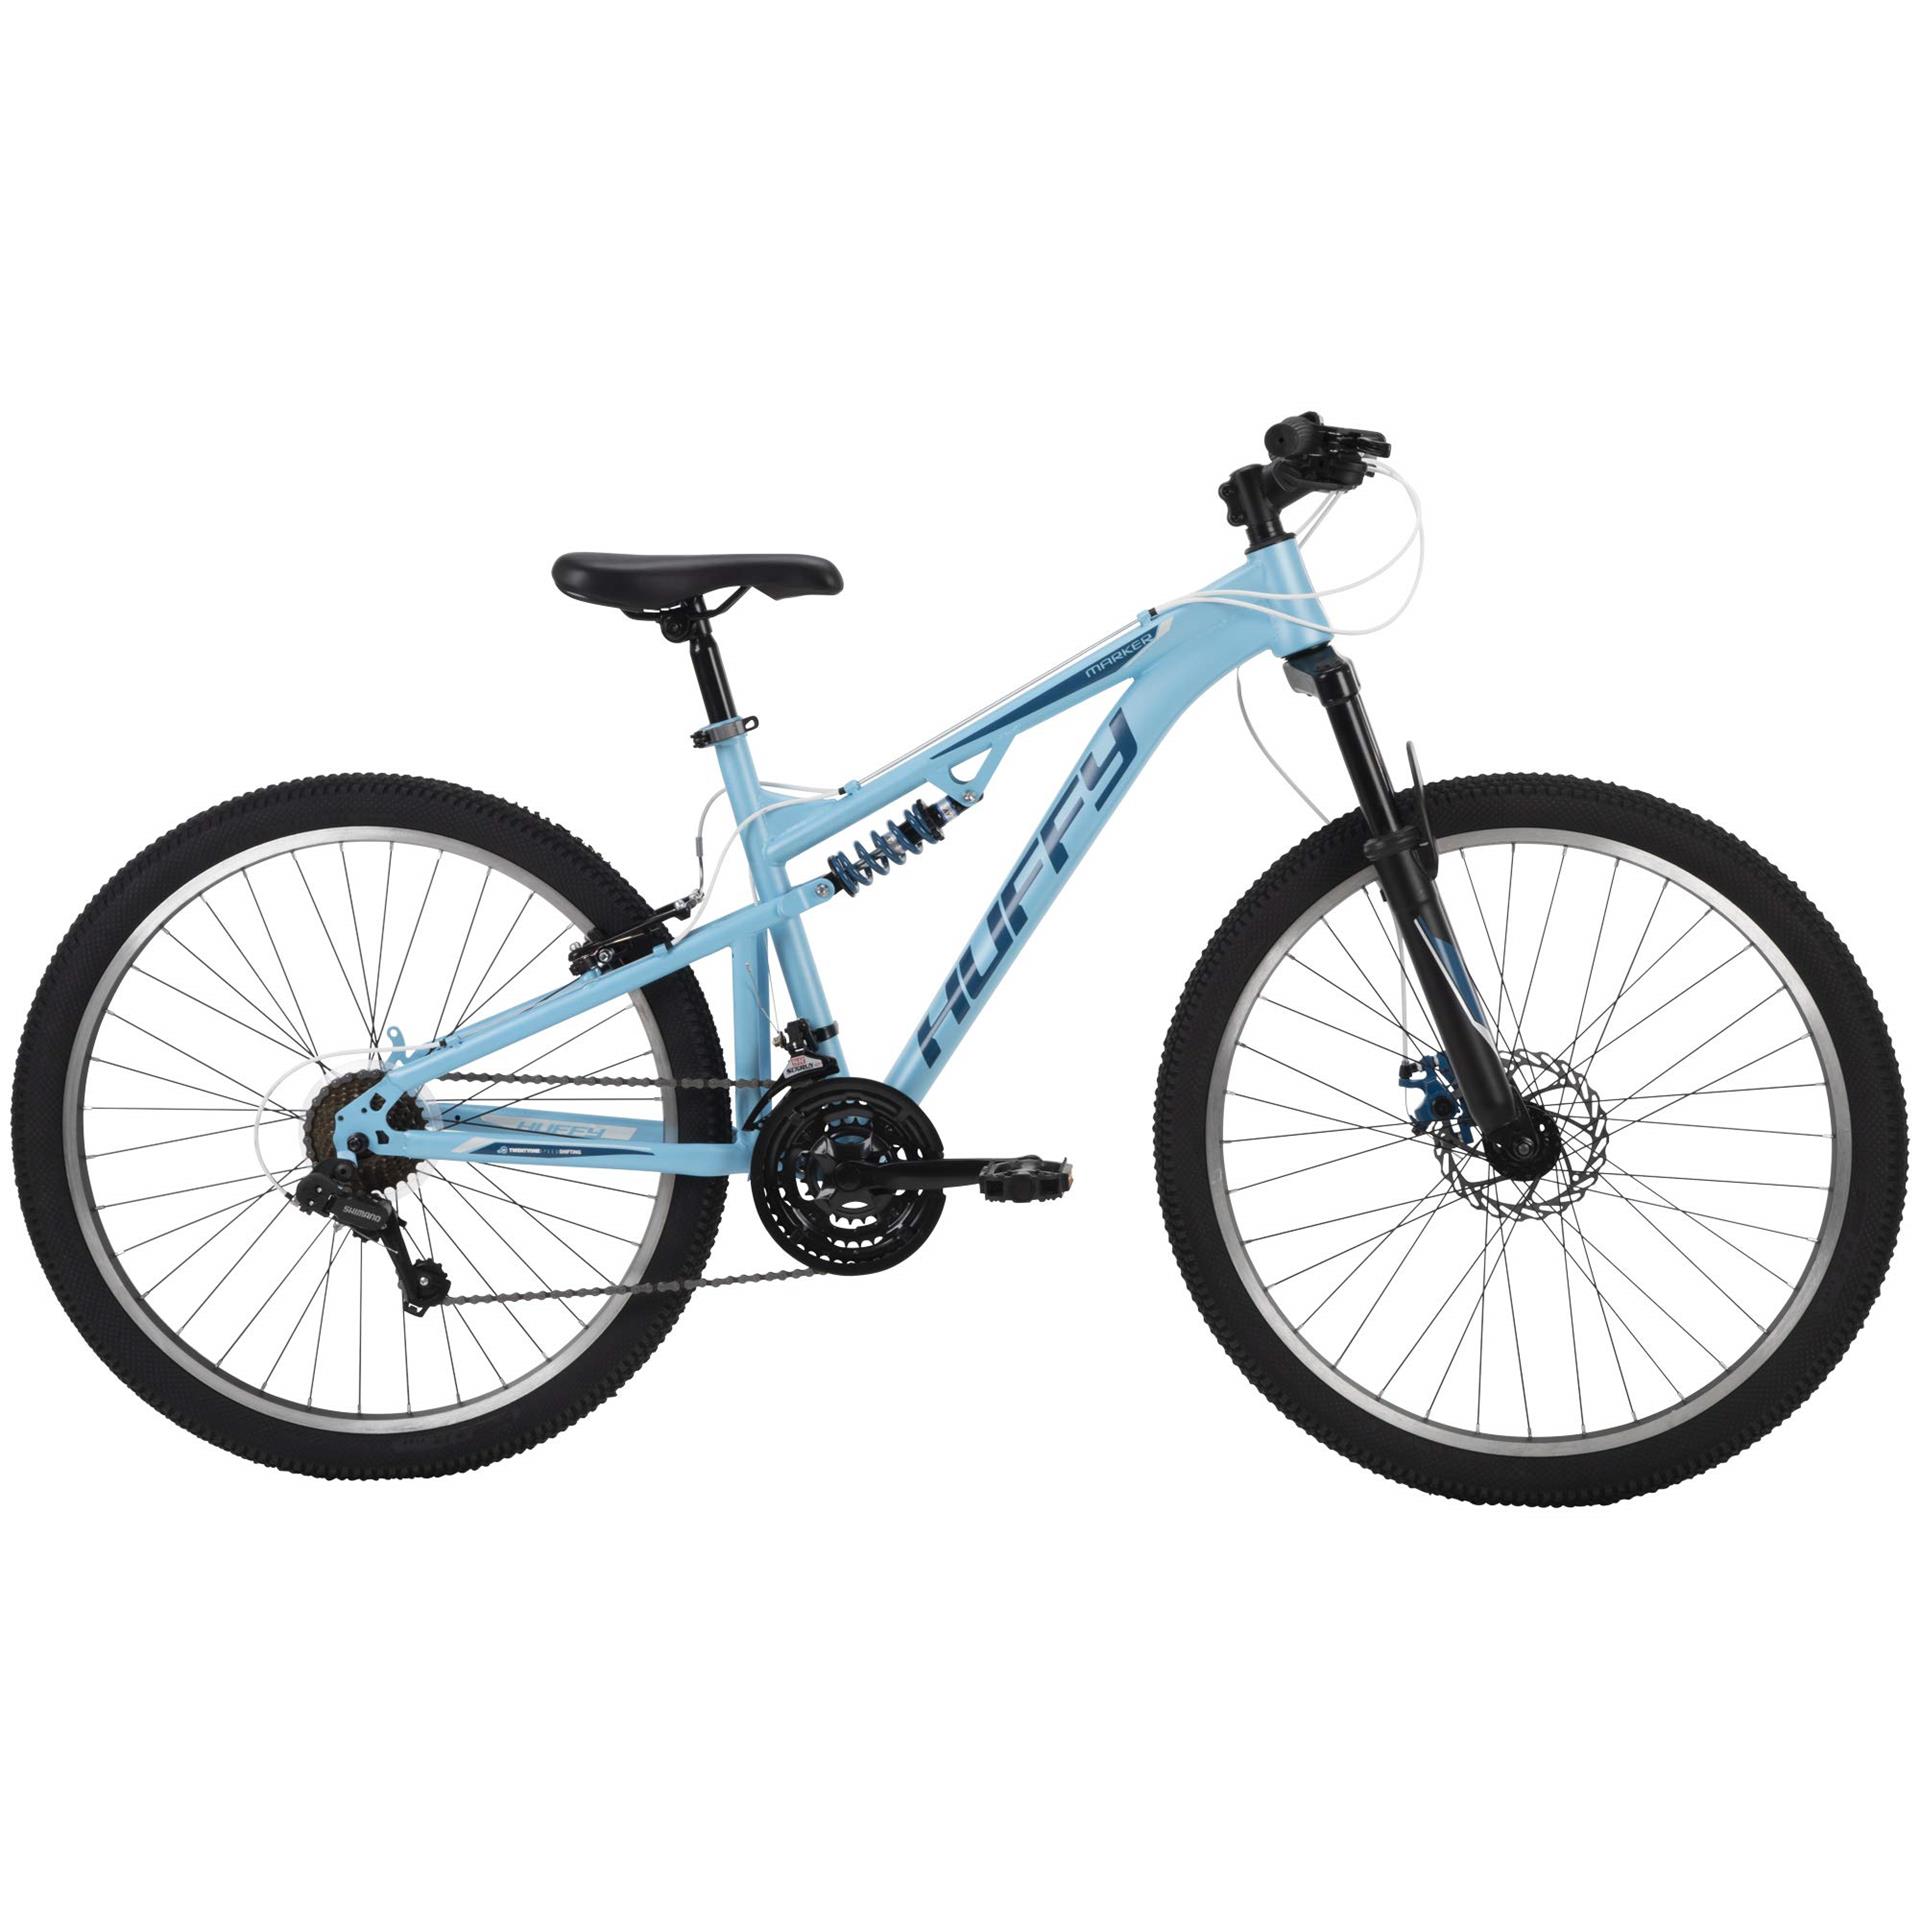 Huffy Marker Горный велосипед, 26", синий